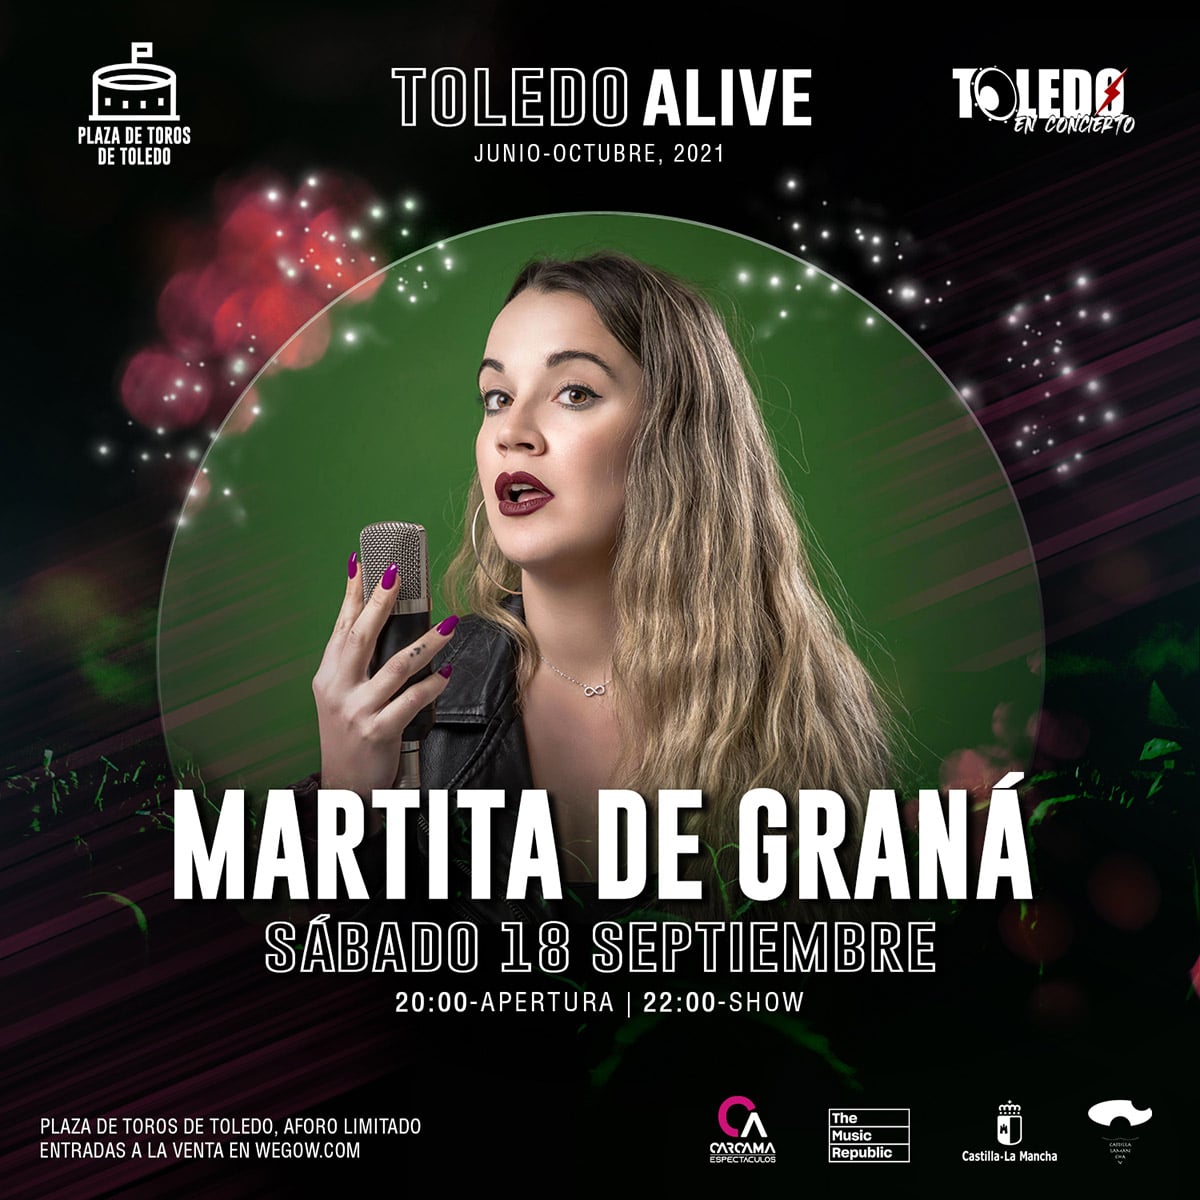 MARTITA_DE_GRANA-TOLEDO-ALIVE